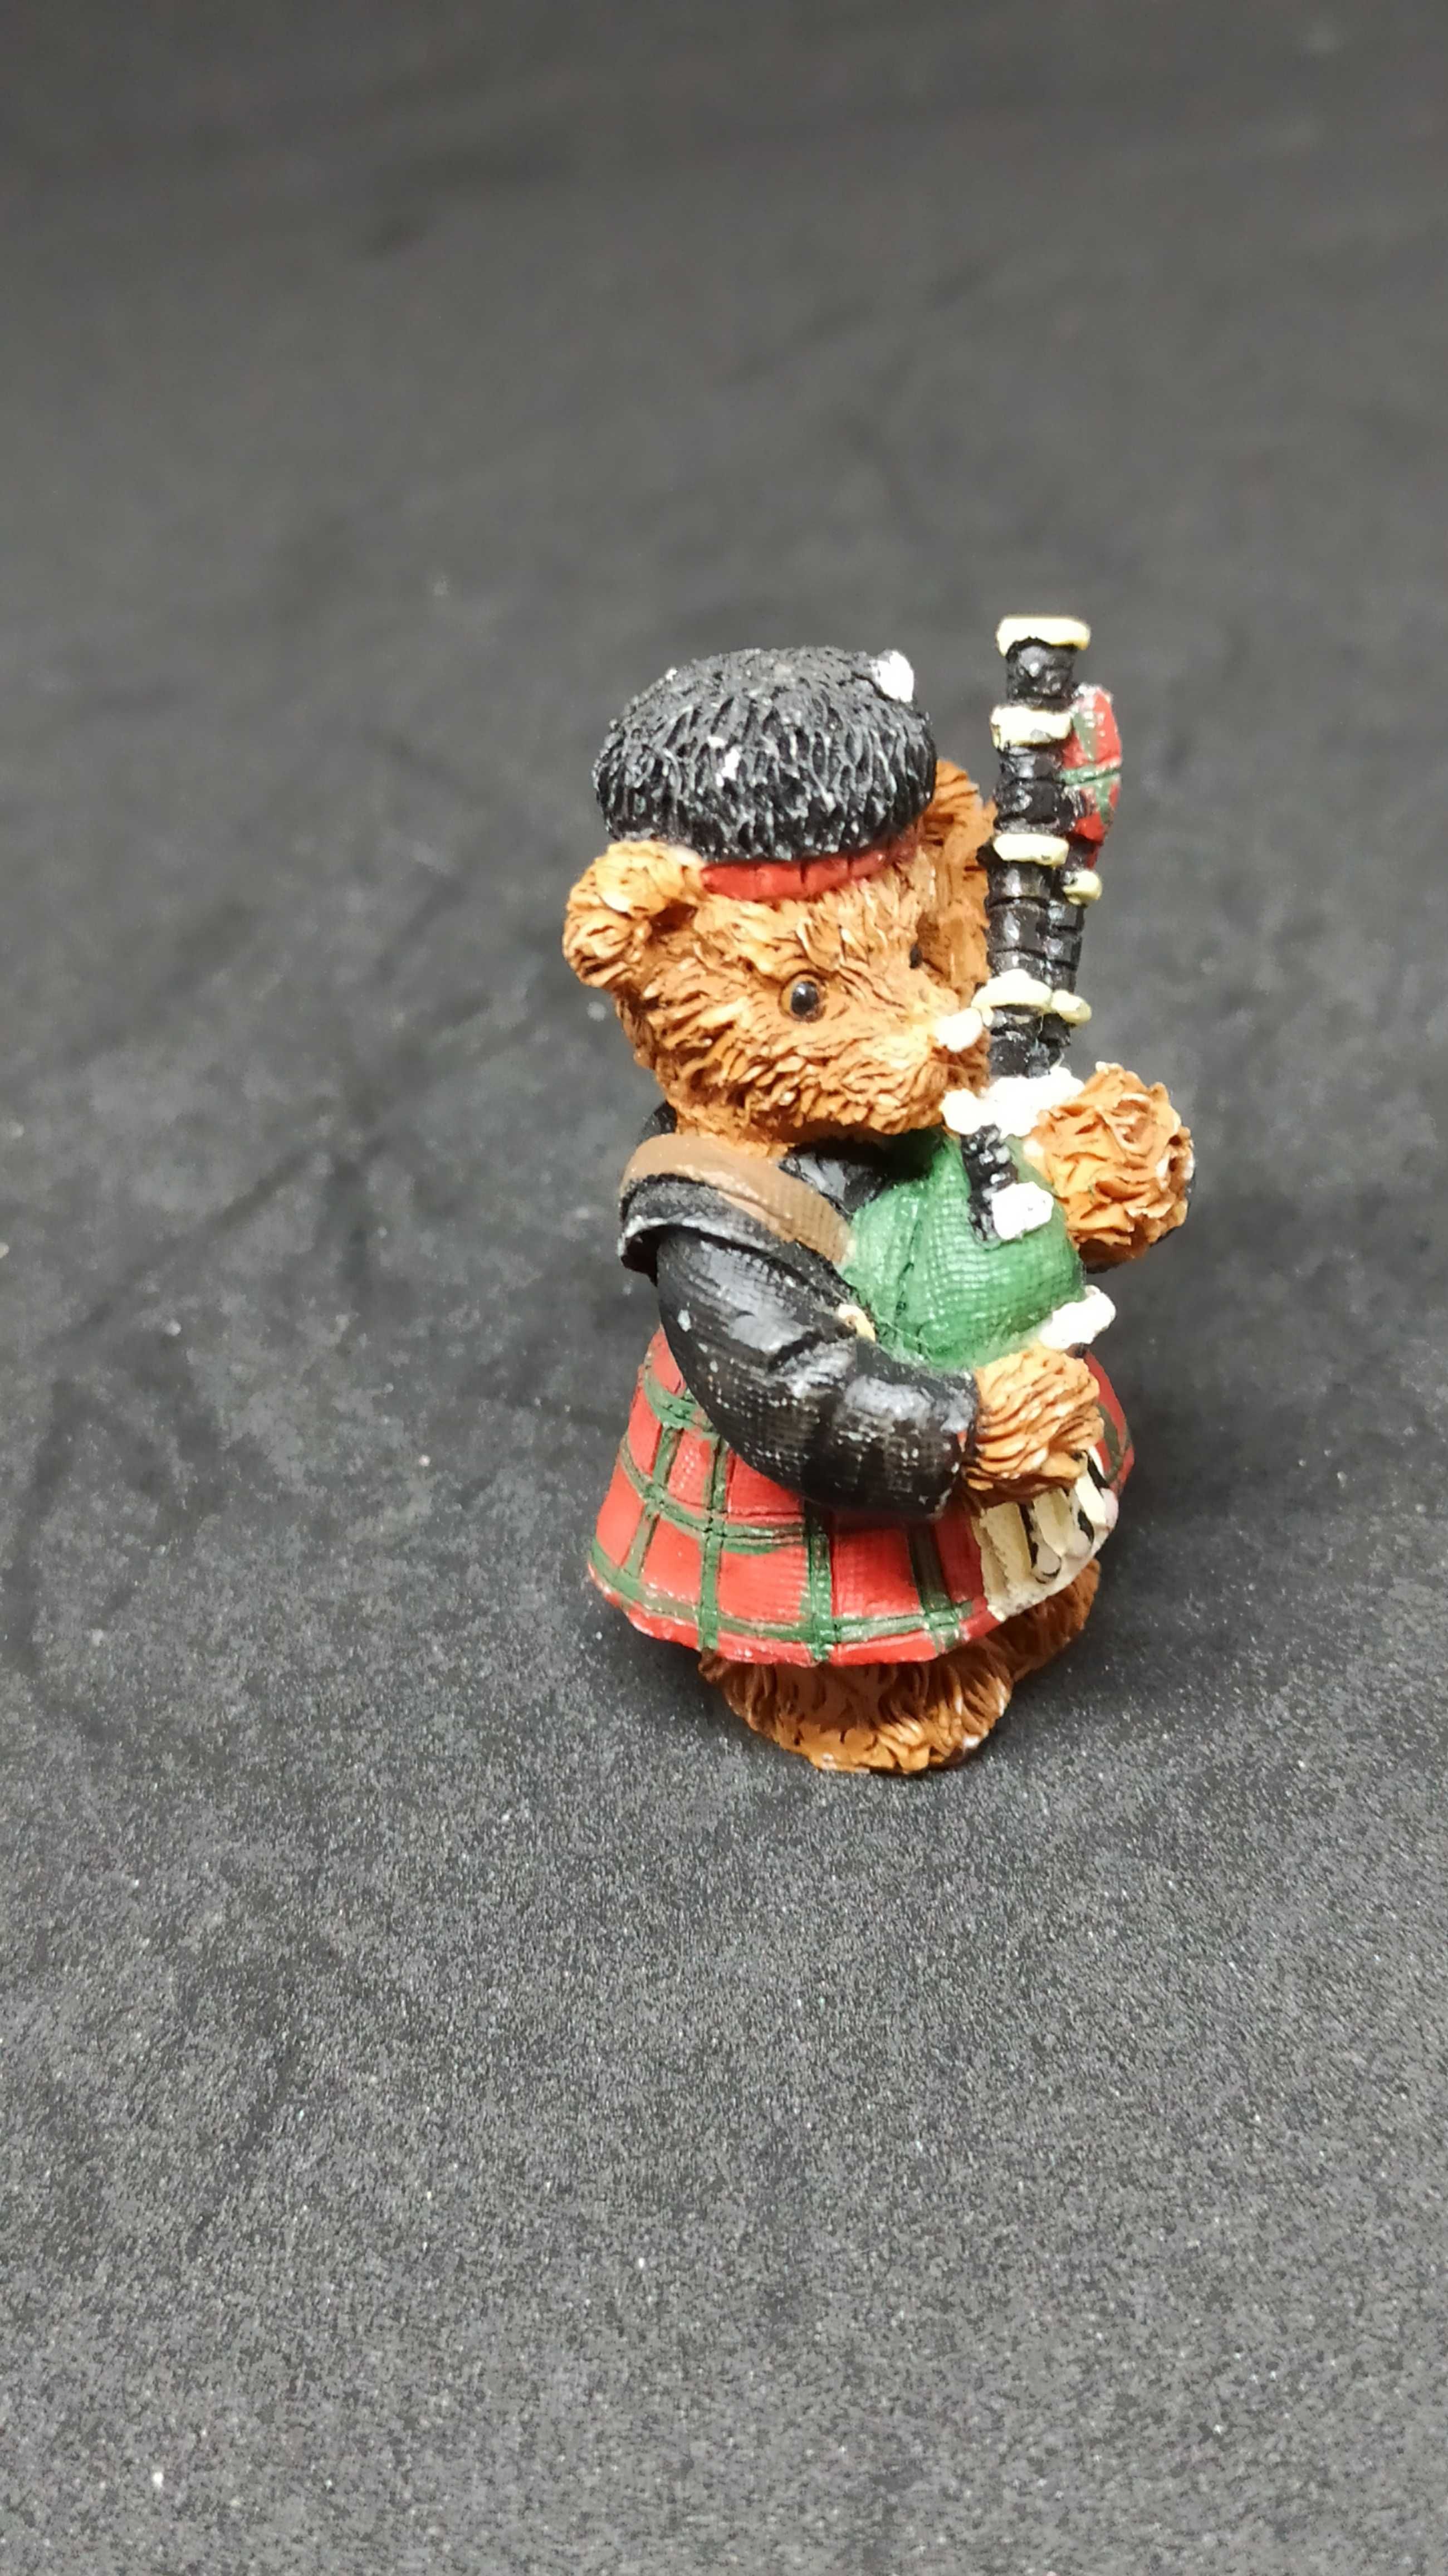 Мини статуэтка Мишка - Шотландец, с волынкой.